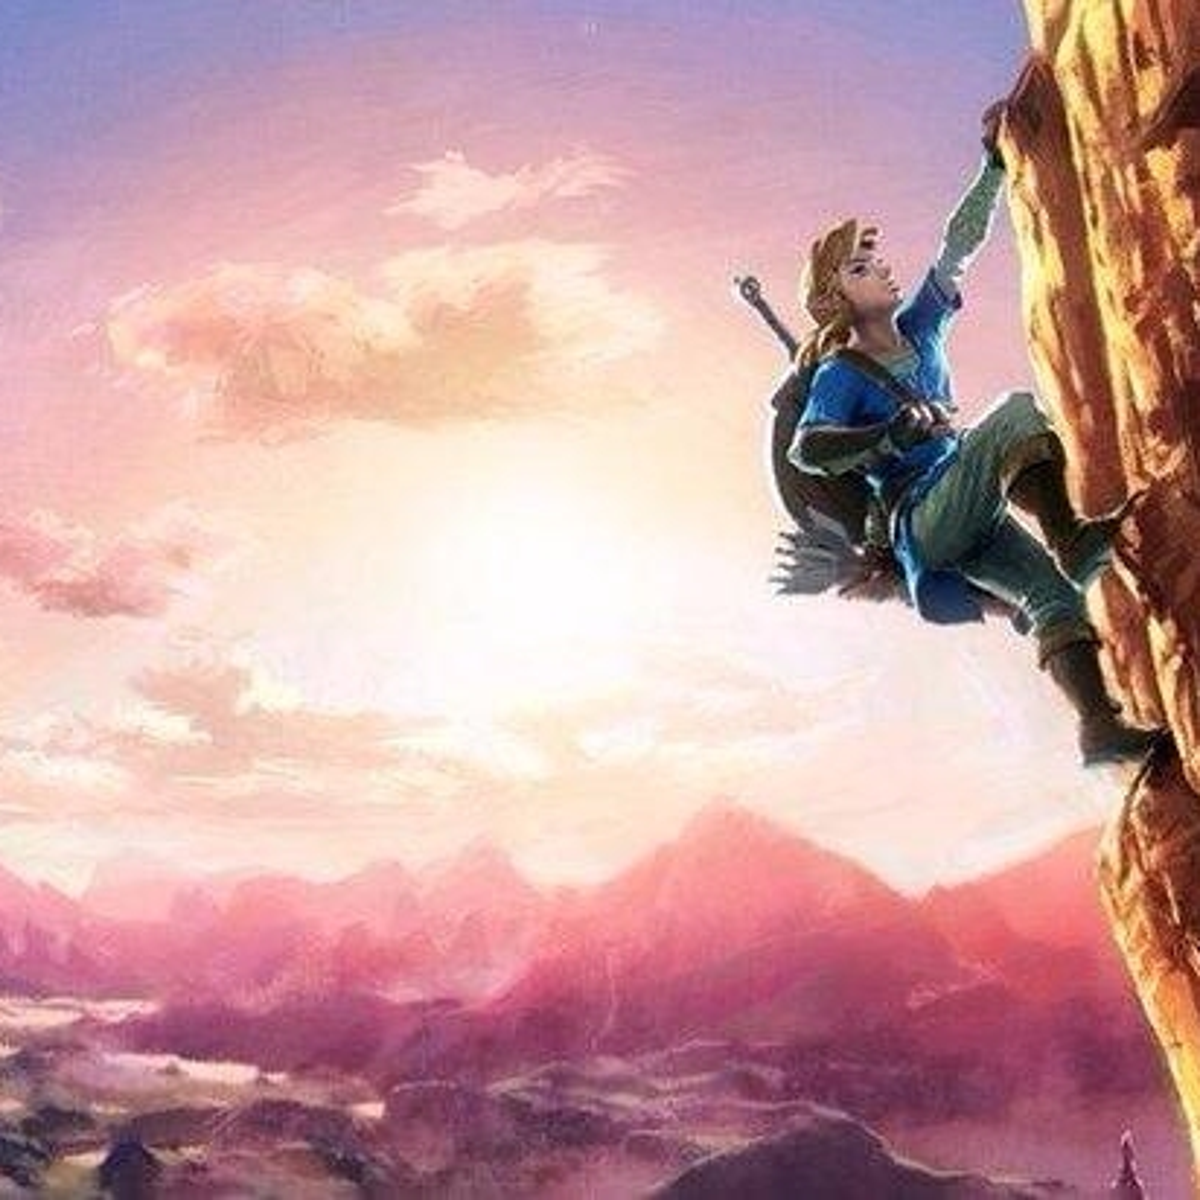 The Legend Of Zelda: Breath Of The Wild Review - The Grandest Adventure Yet  - SlashGear